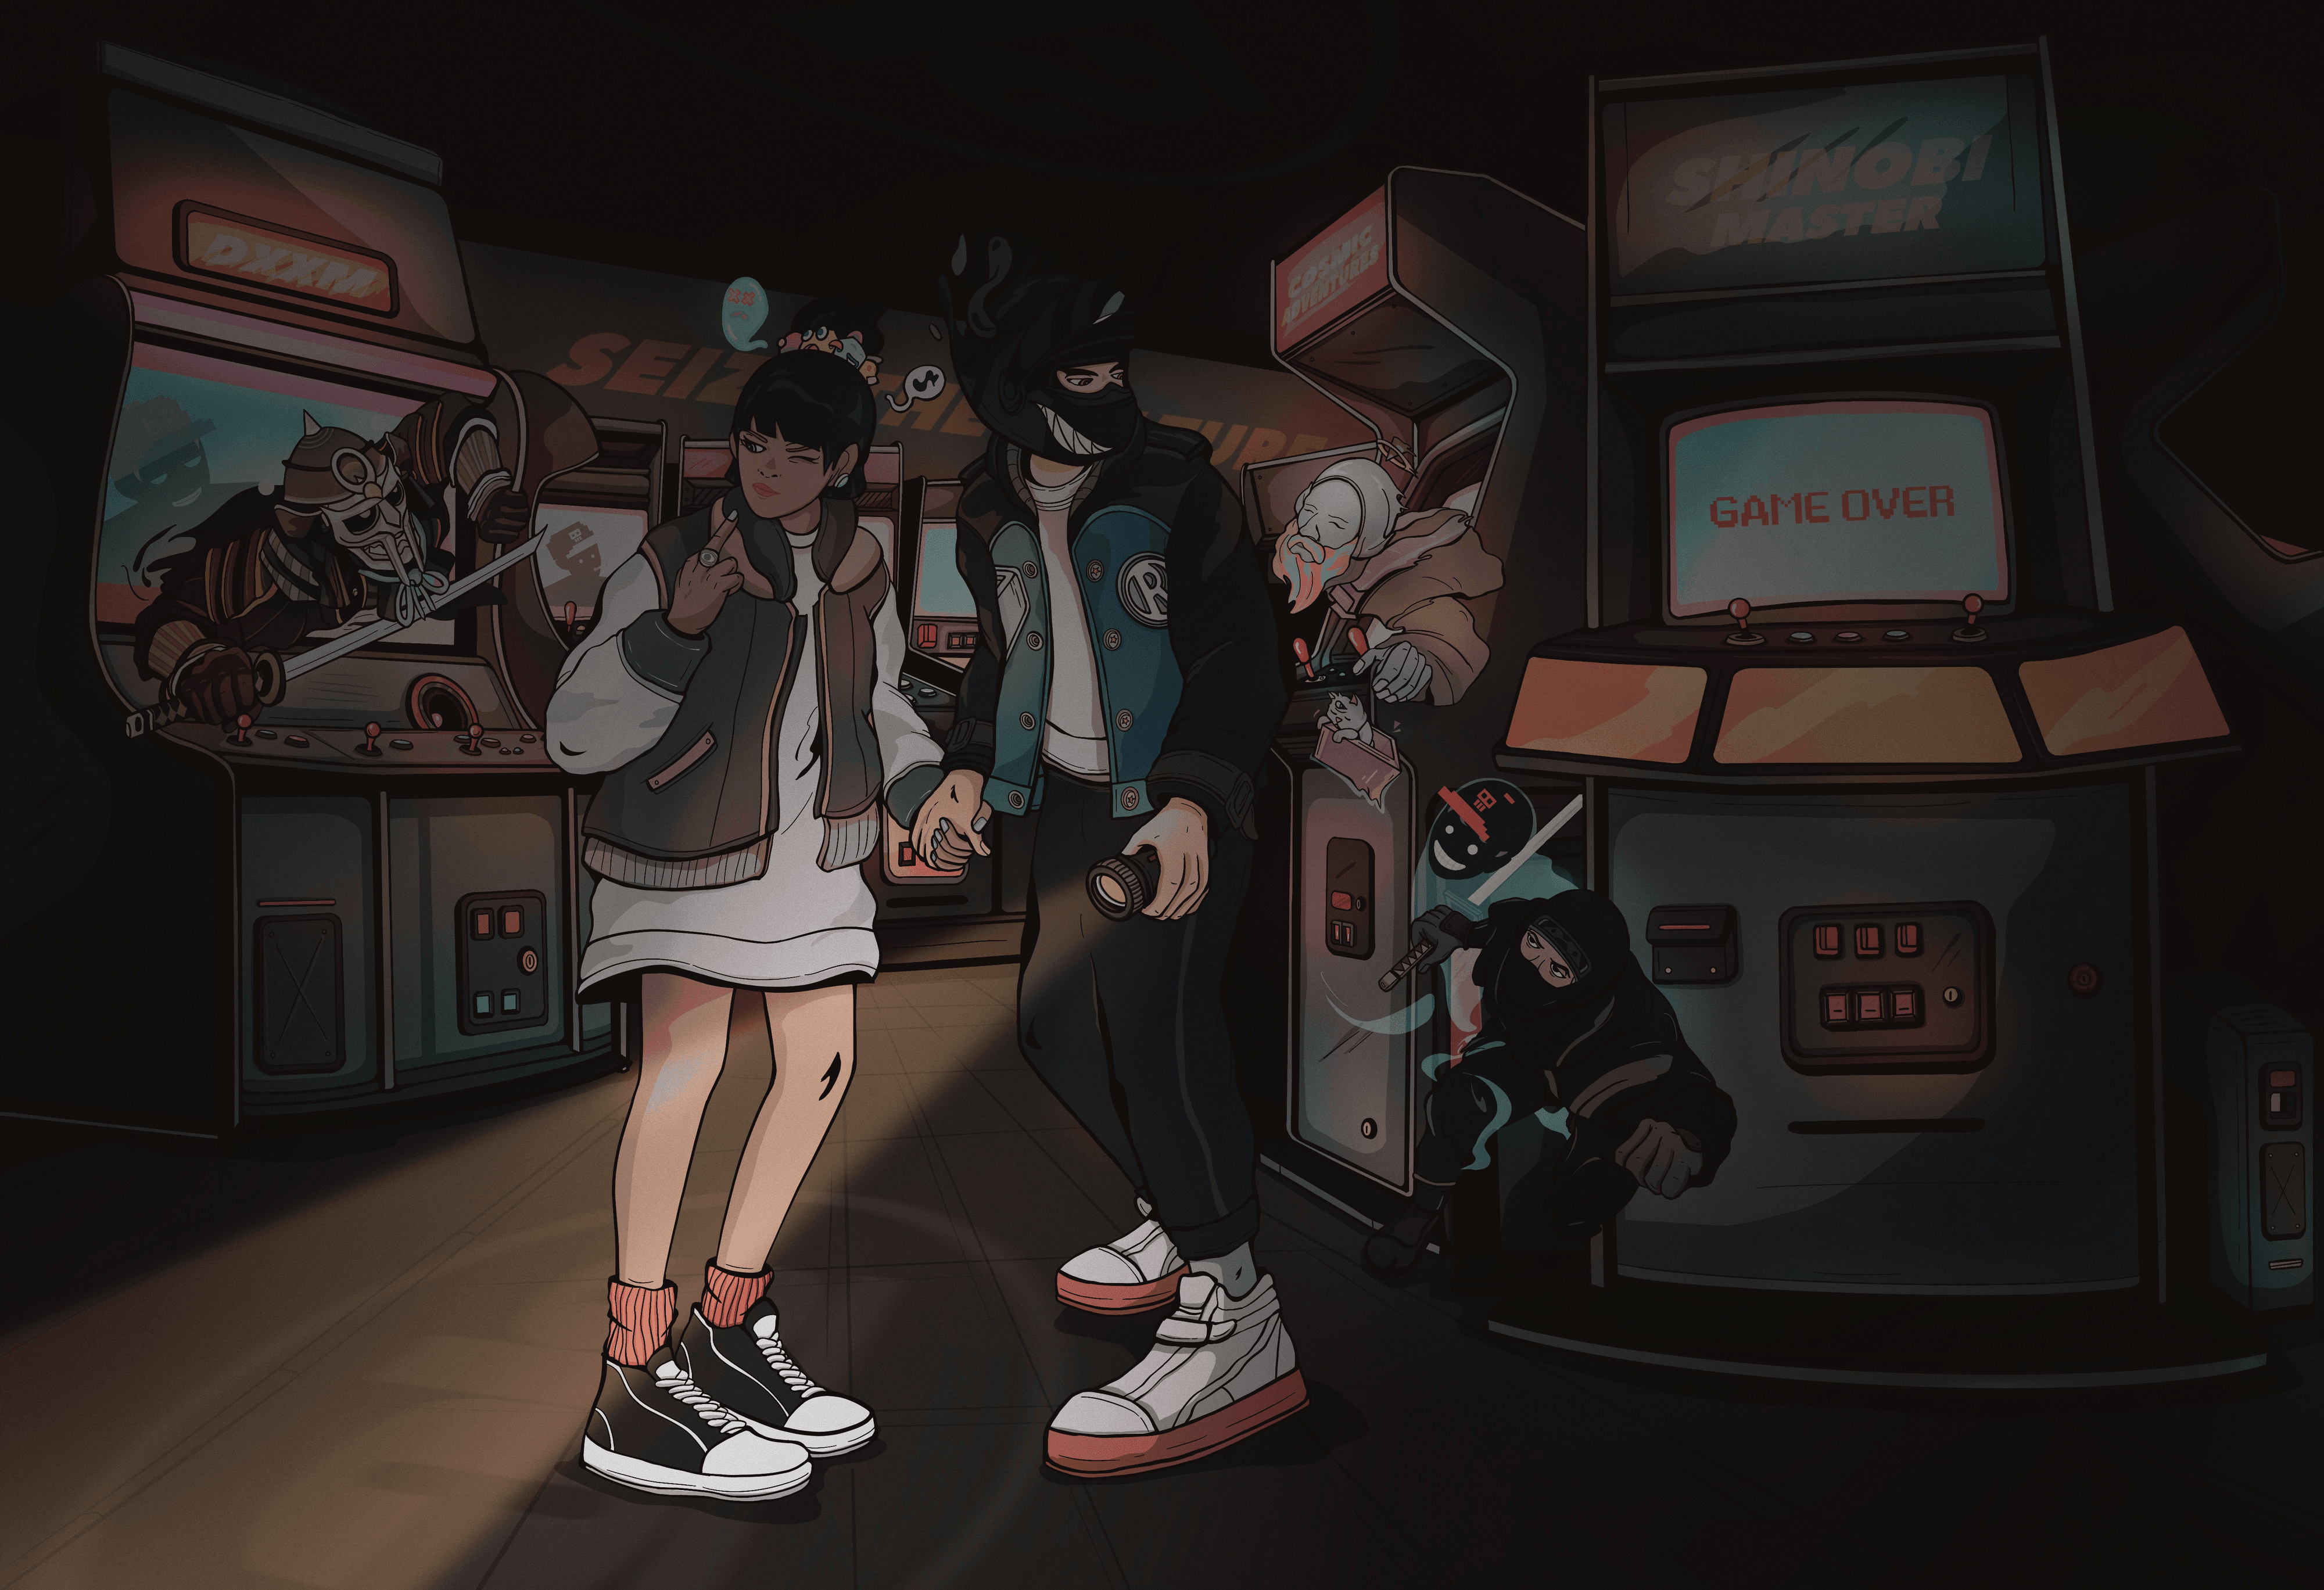 A Night at the Arcade